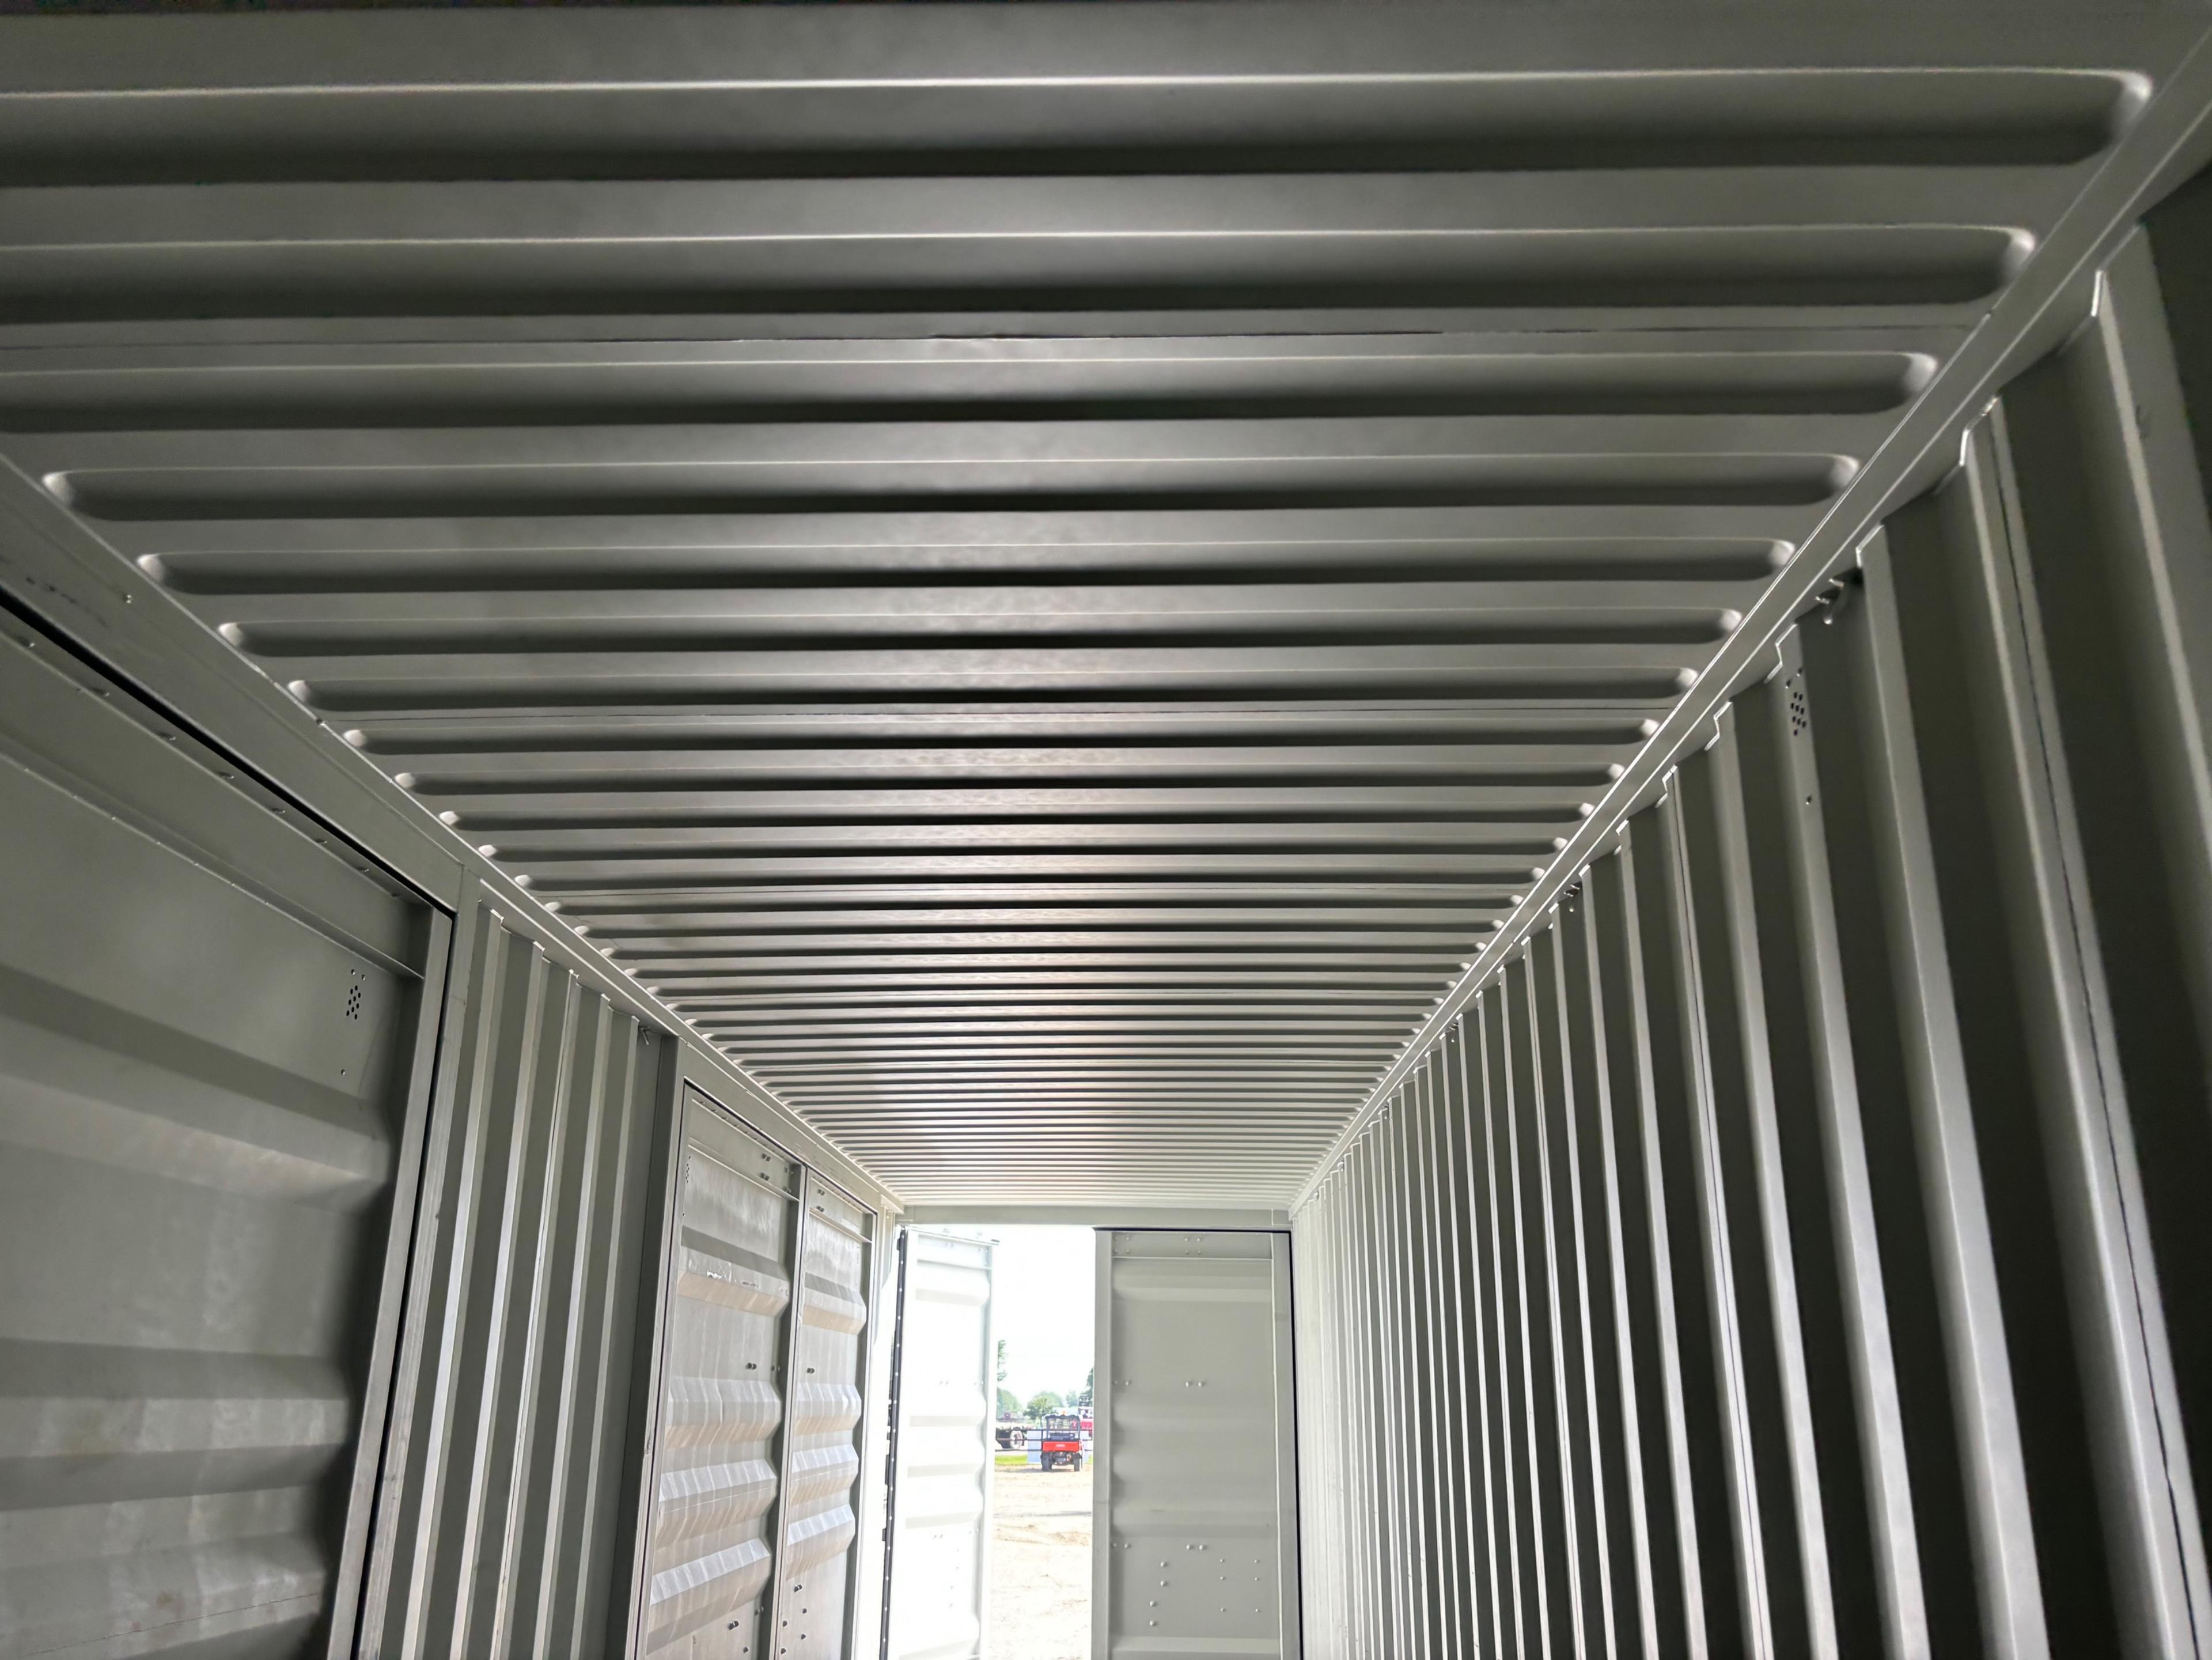 40' High Cube Multi Door Container-1 Tripper